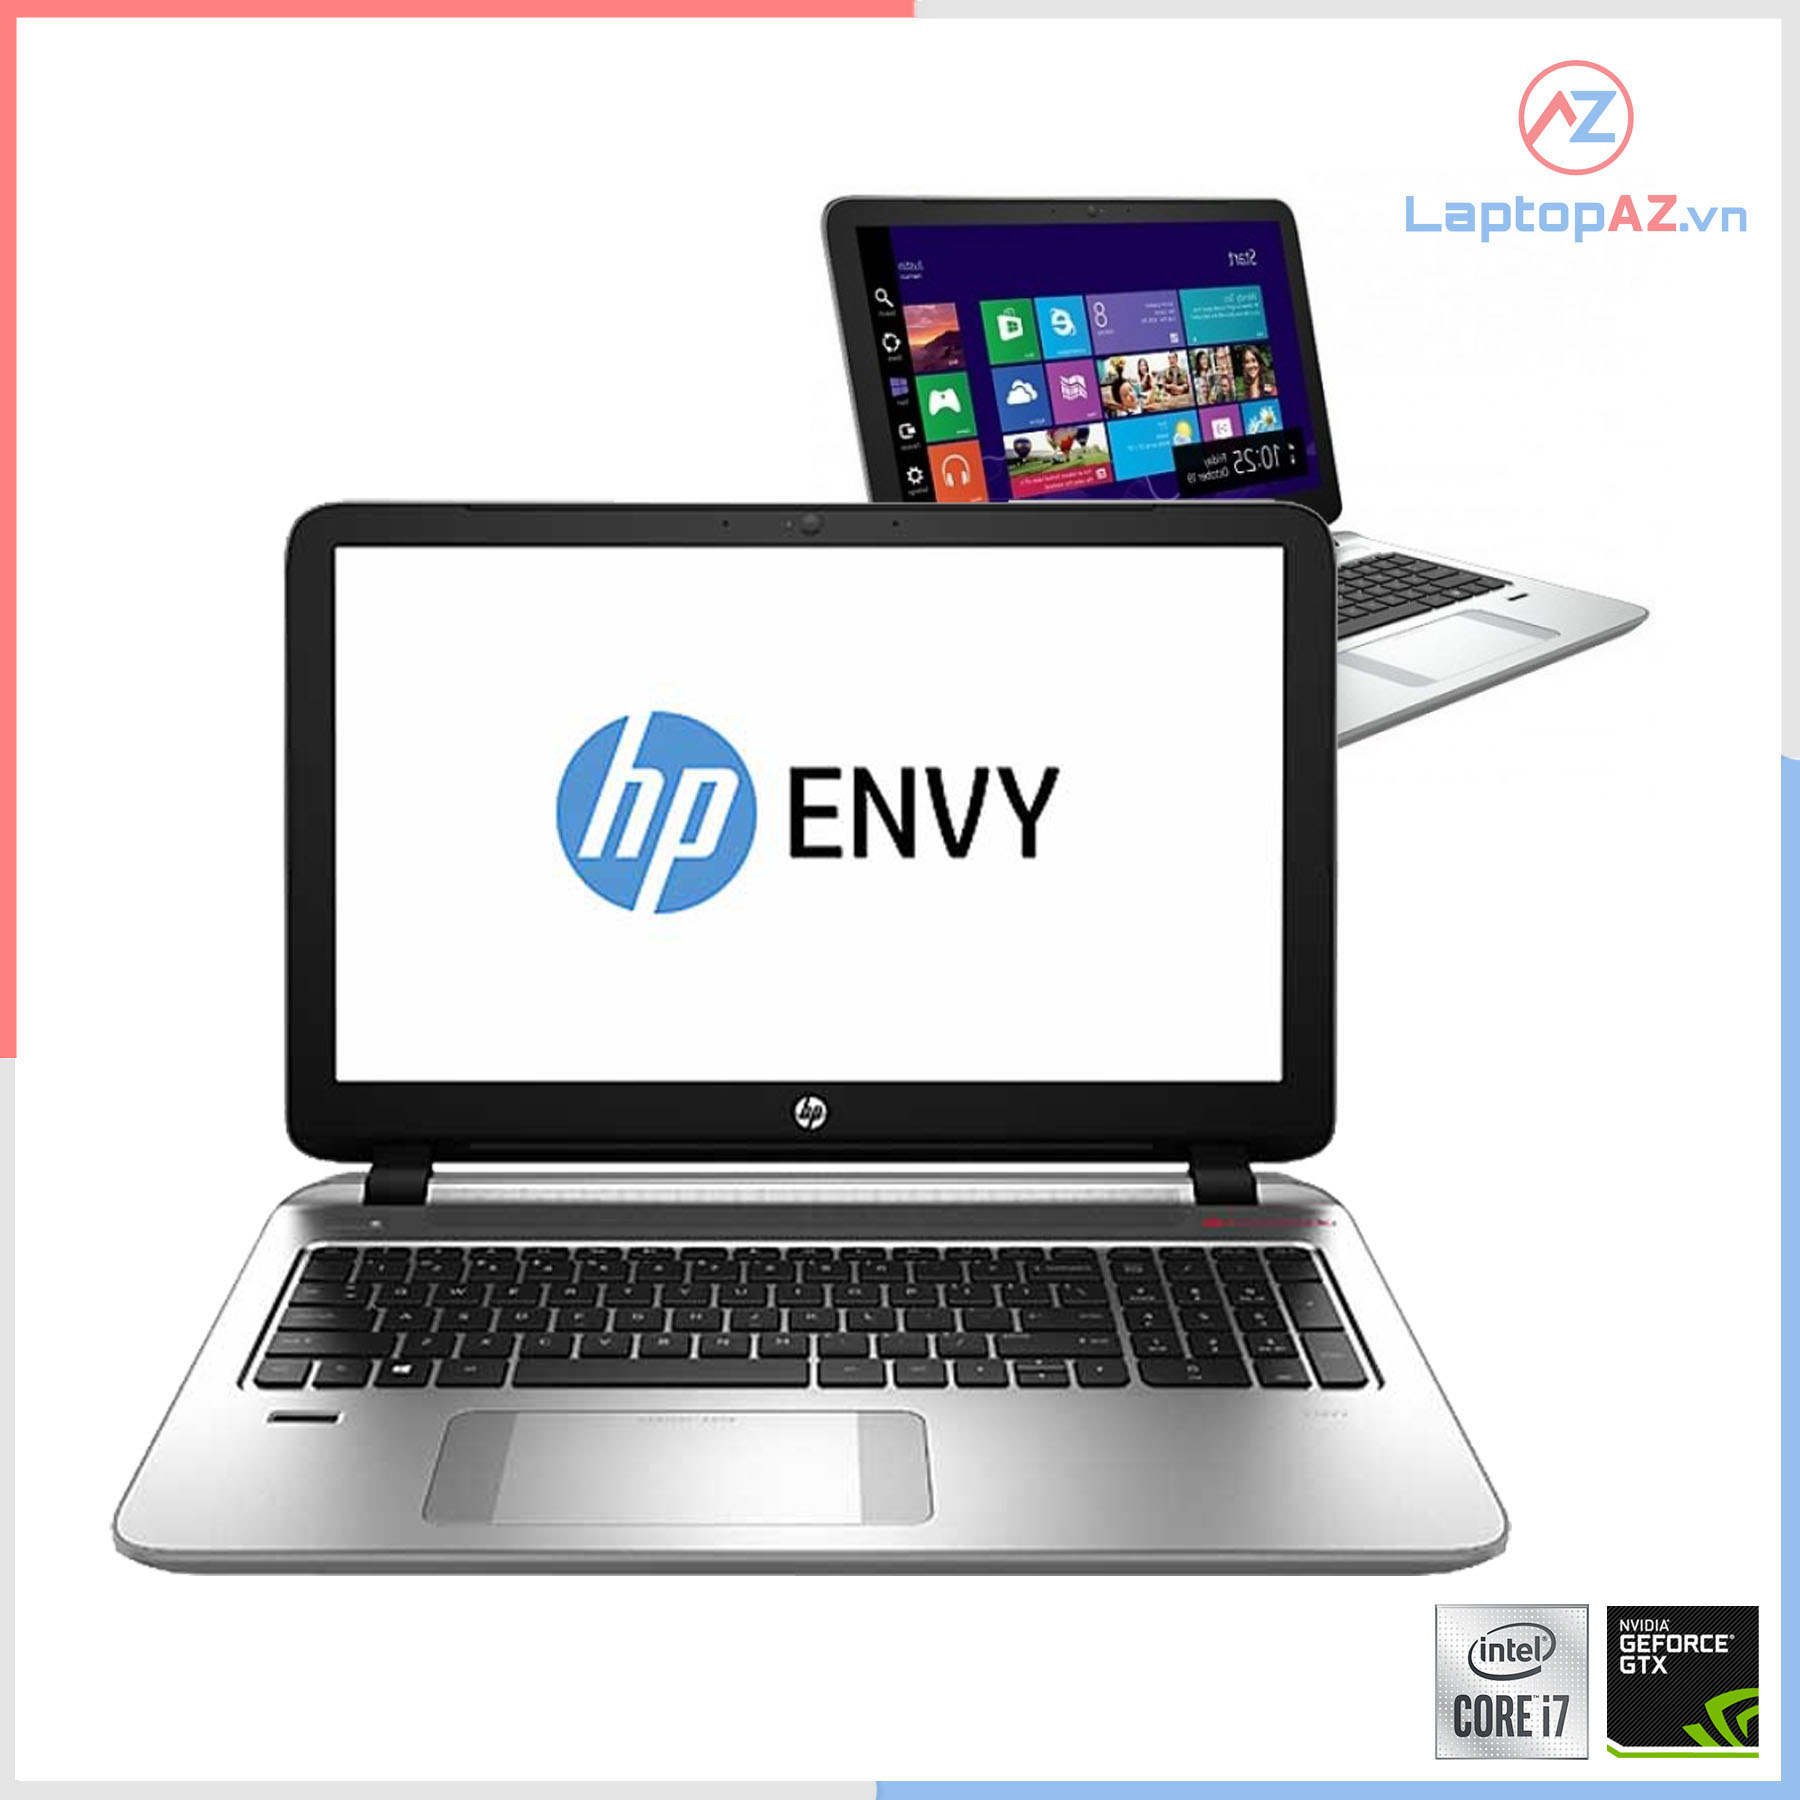 Laptop HP ENVY 15 (Core i7-6500U, 8GB, 1TB, VGA 4GB NVIDIA GeForce GTX 950M, 15.6 Full HD)